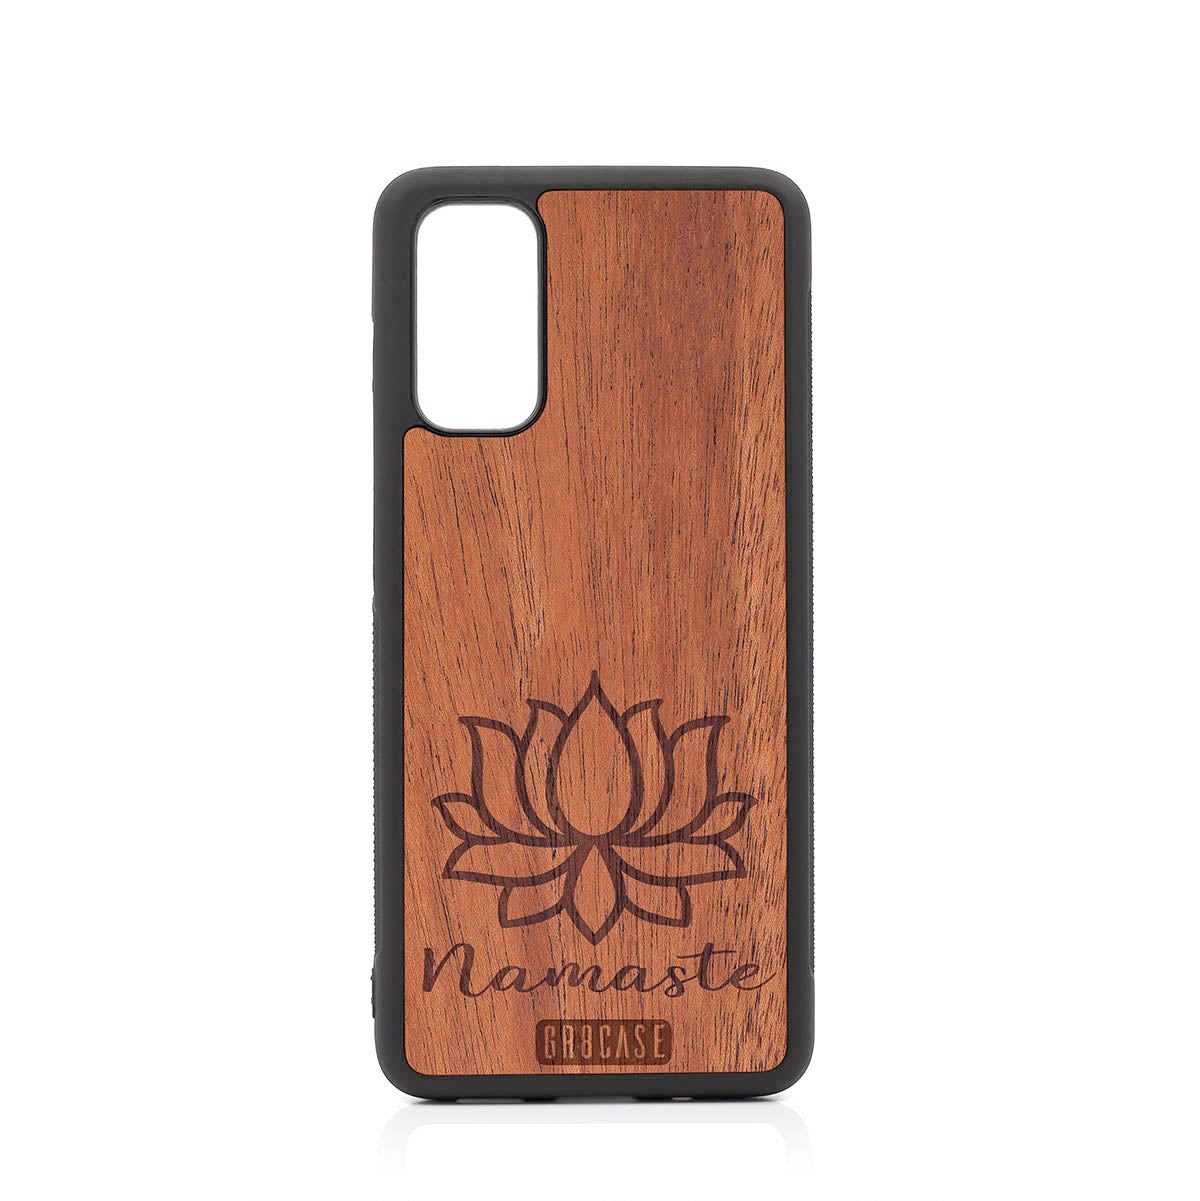 Namaste (Lotus Flower) Design Wood Case For Samsung Galaxy S20